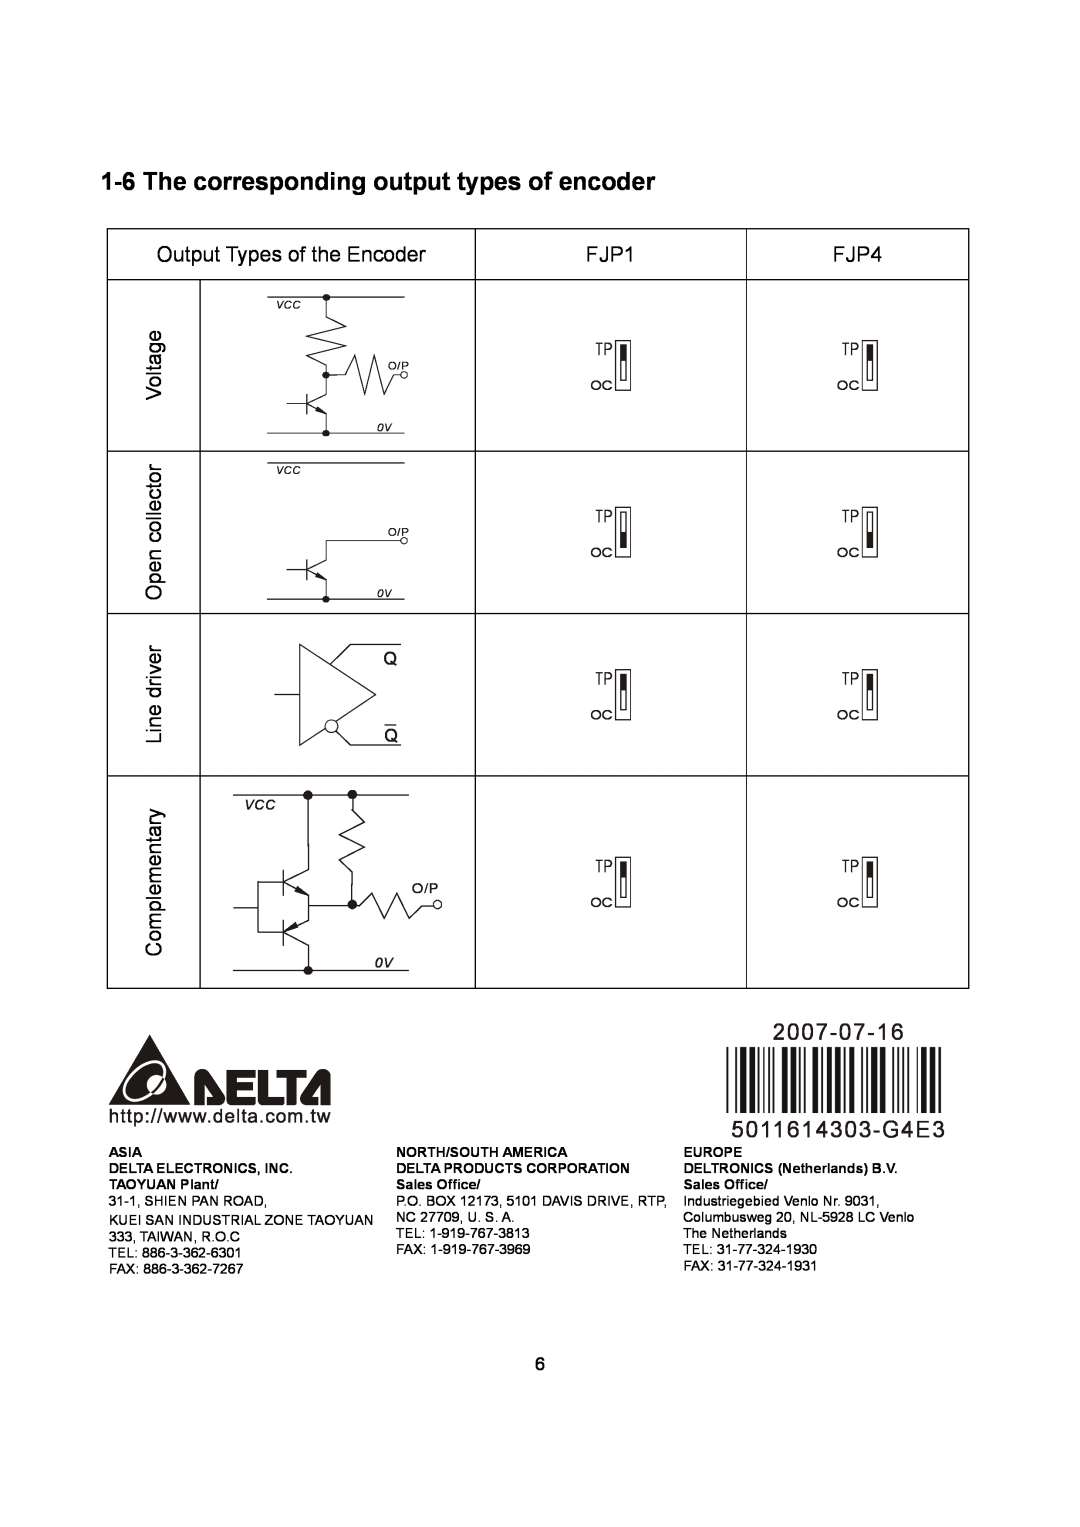 Delta Electronics PG-04 The corresponding output types of encoder, 2007-07-16, 5011614303-G4E3, FJP1, FJP4, Voltage 